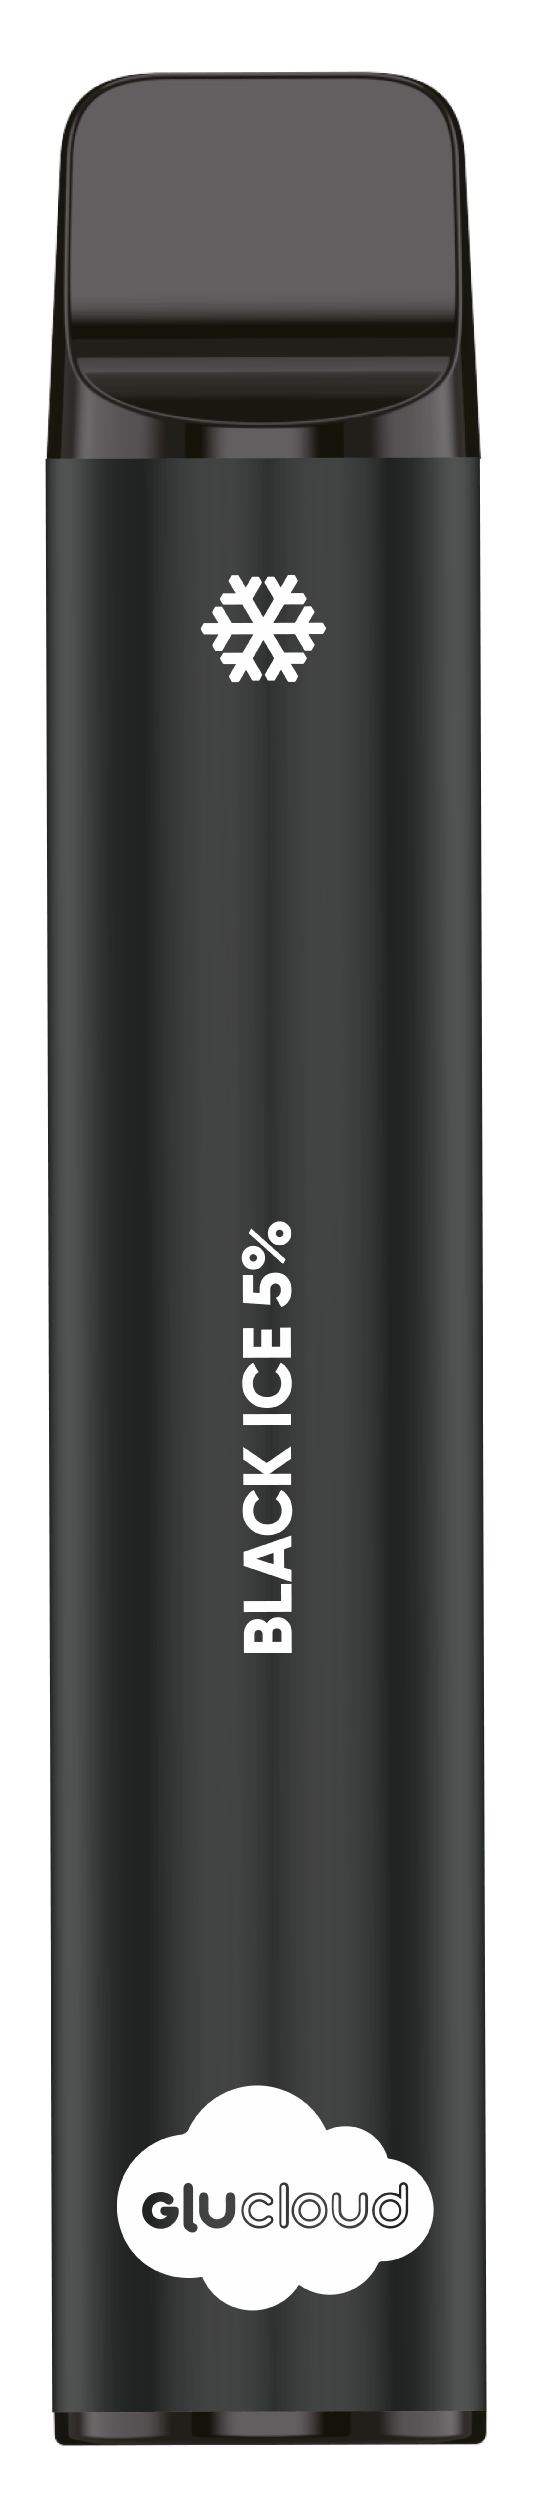 Glucloud Black Ice XL 5% Nicotina